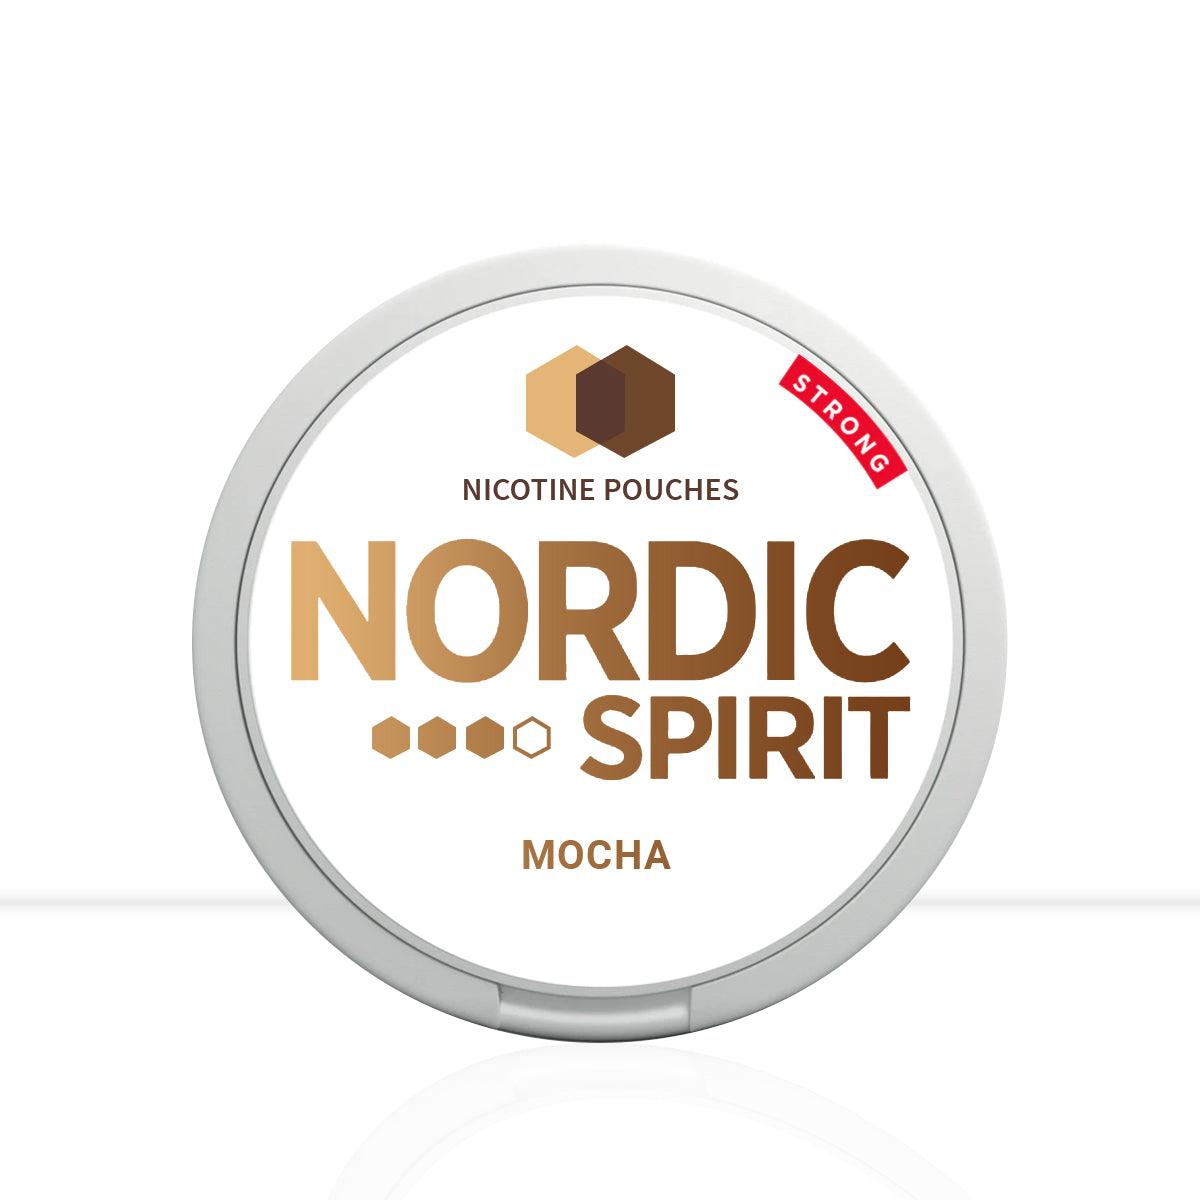 Nordic Spirit Nicotine Pouches Mocha - Accessories